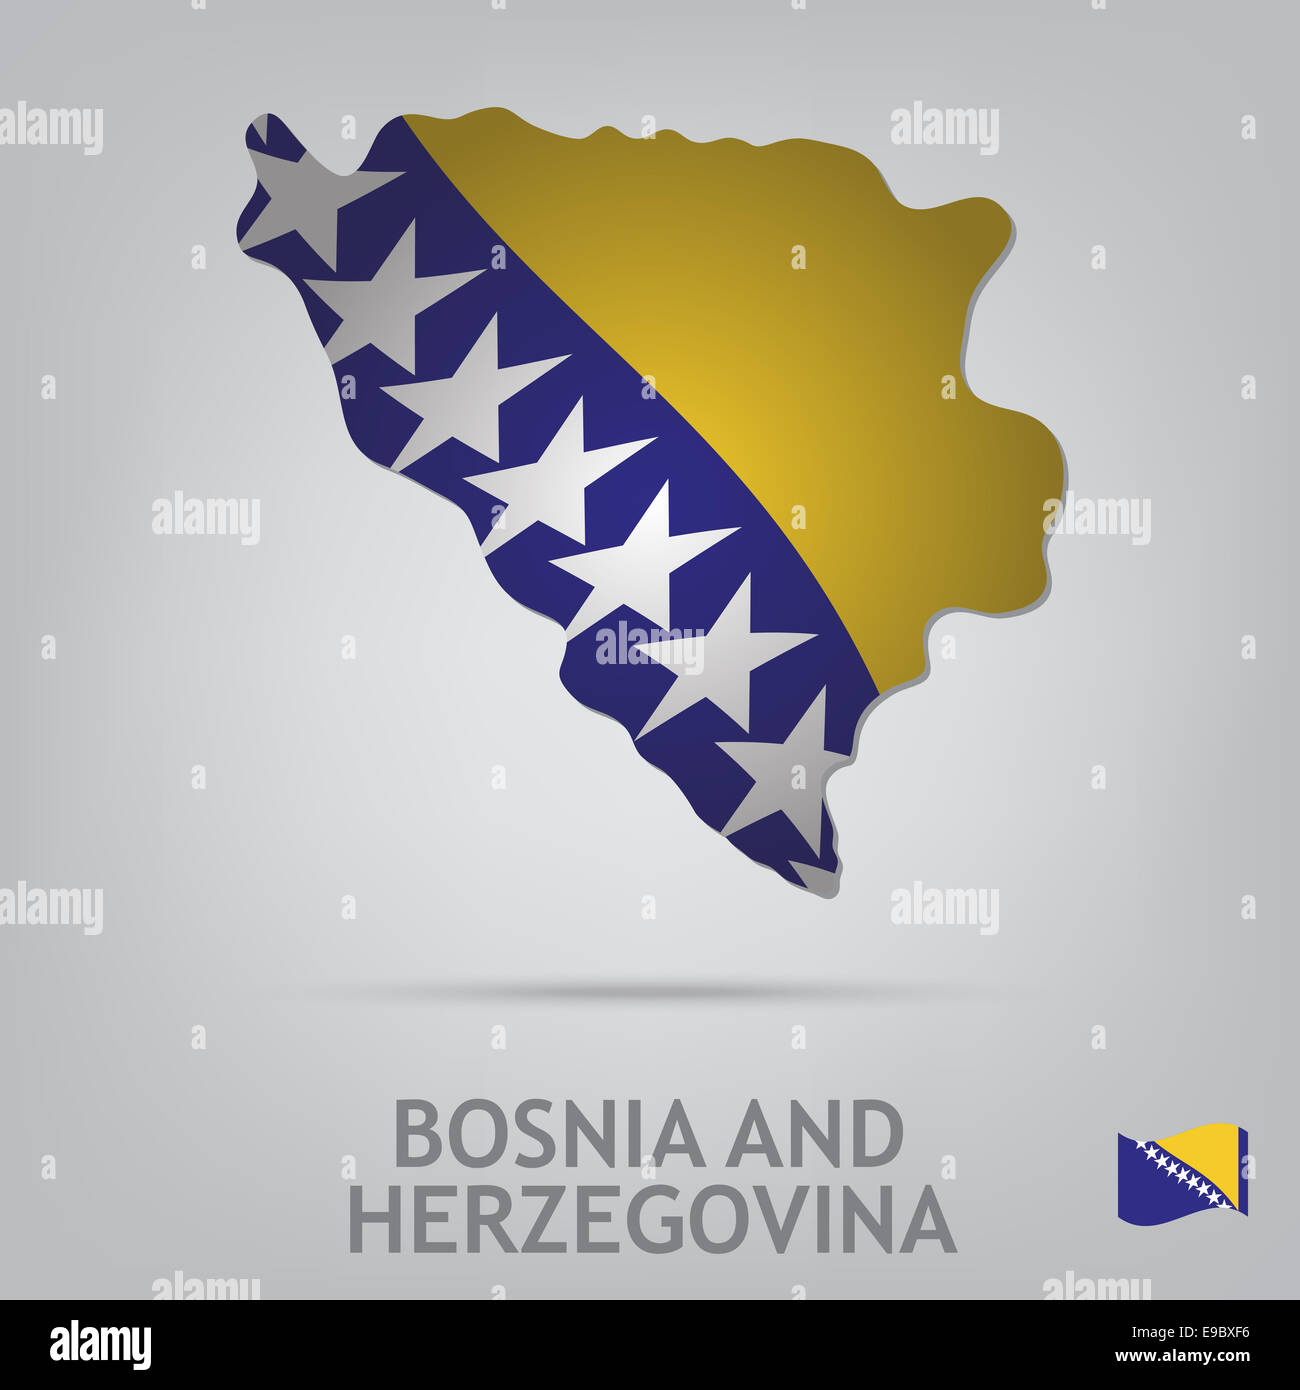 bosnia and herzegovina Stock Photo